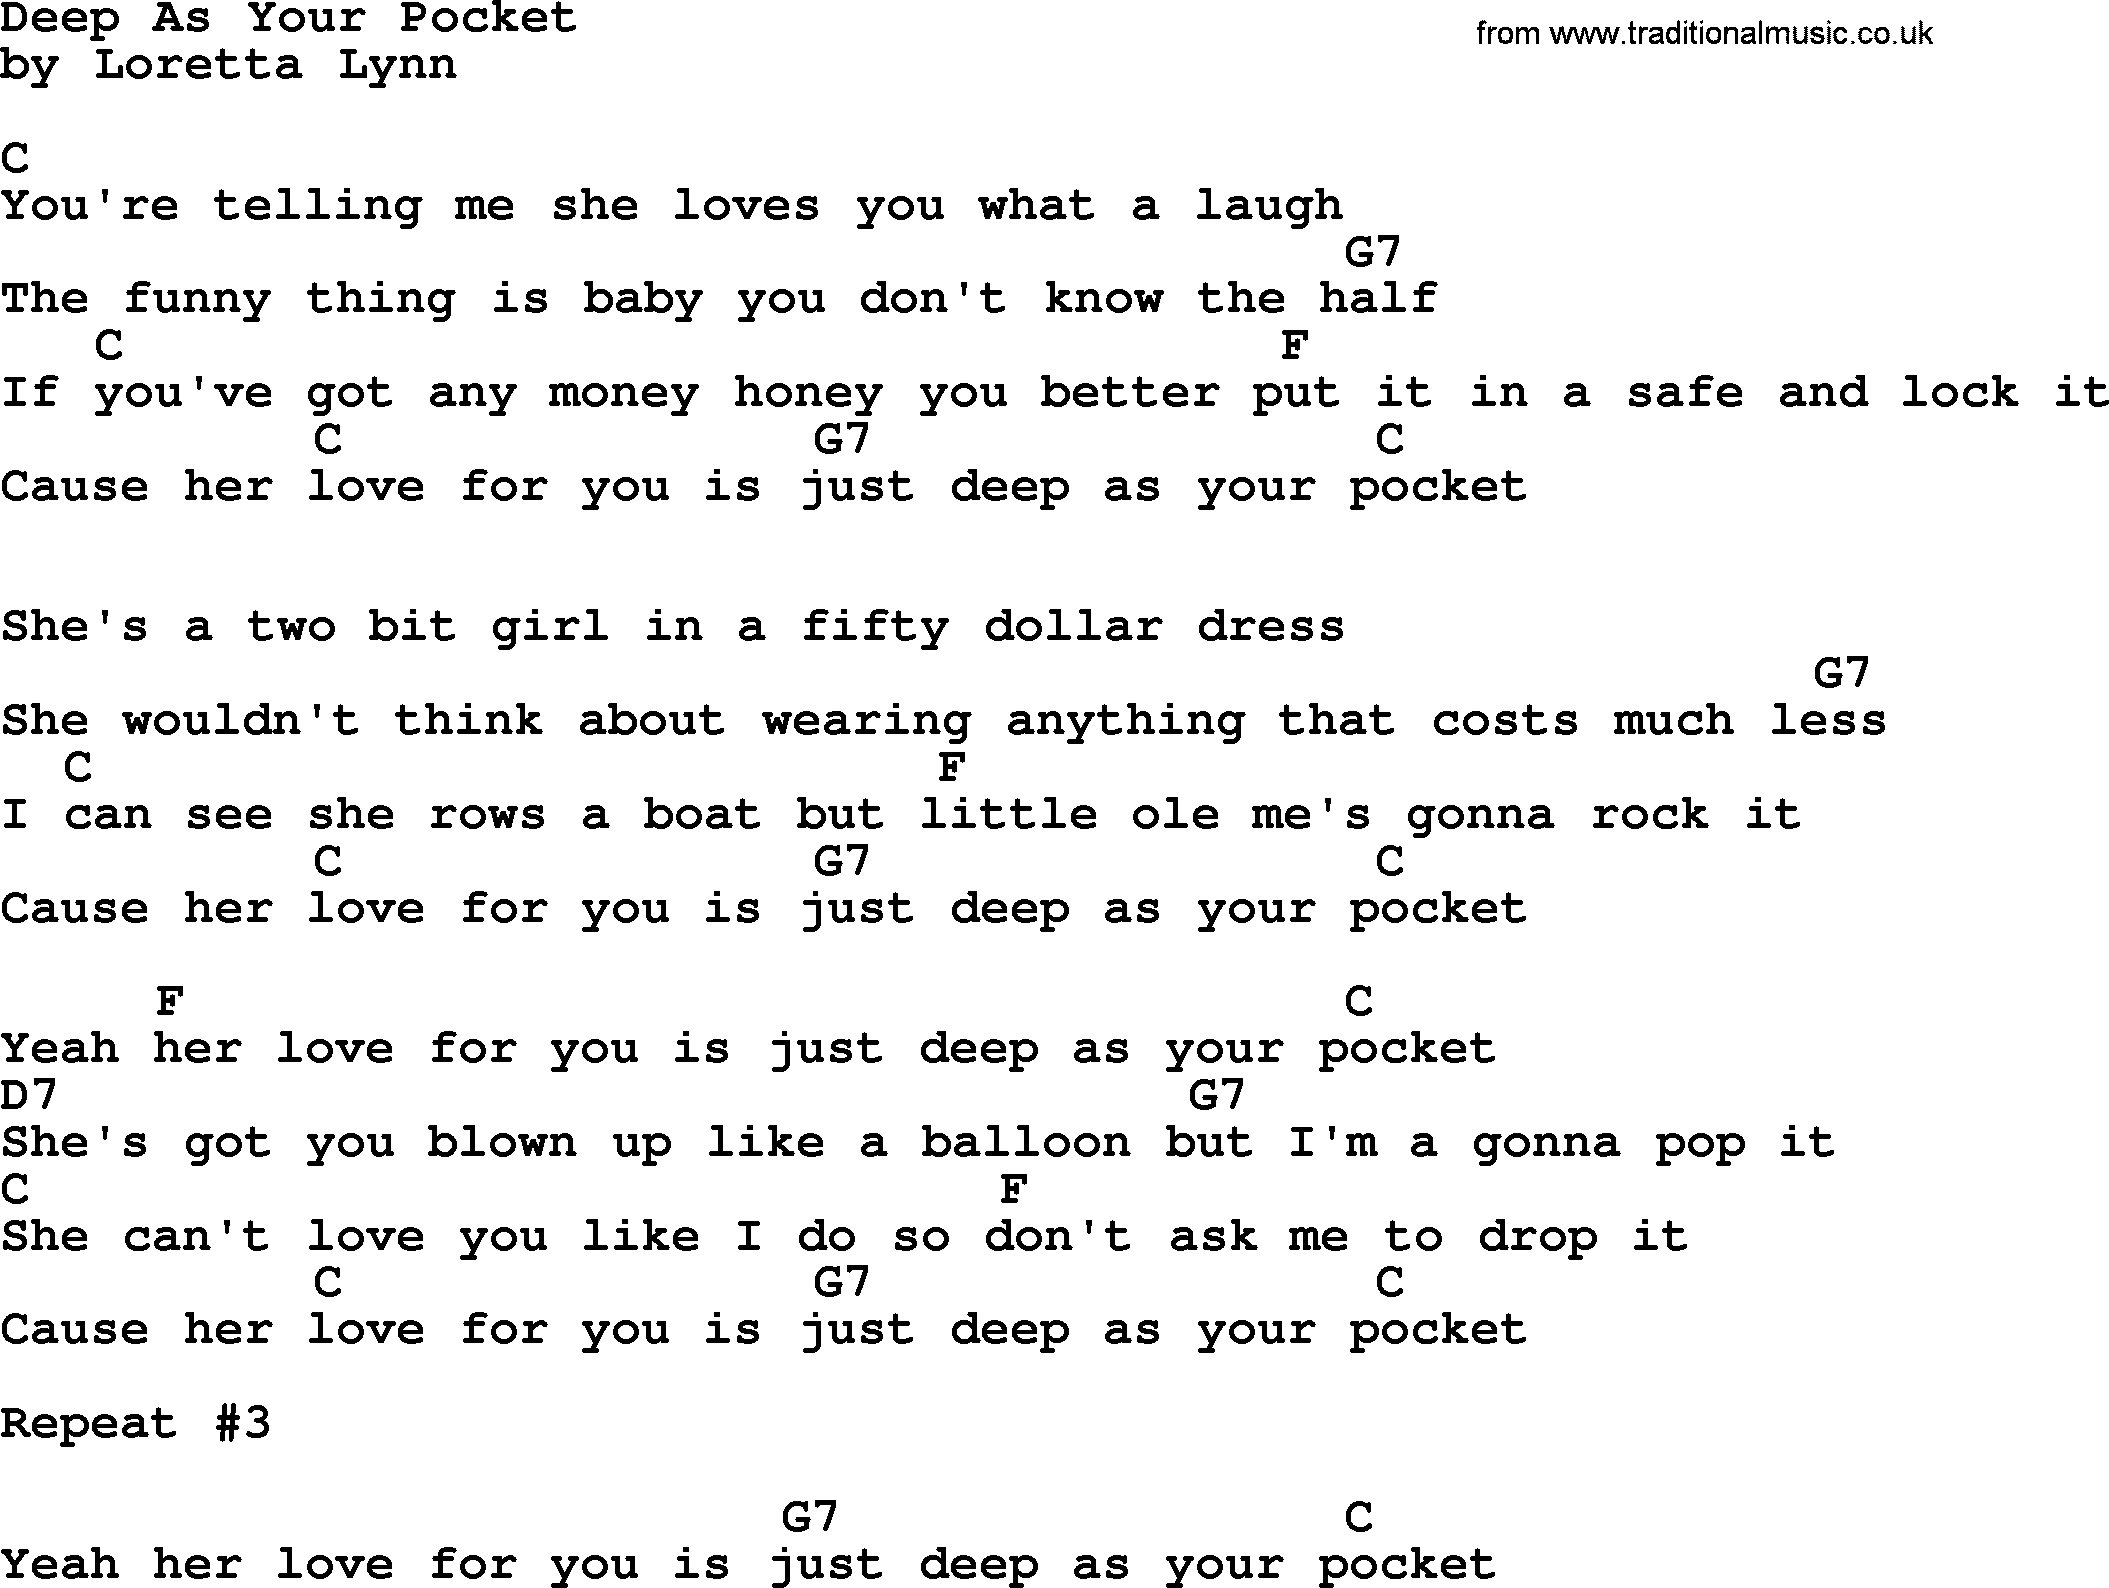 Loretta Lynn song: Deep As Your Pocket lyrics and chords